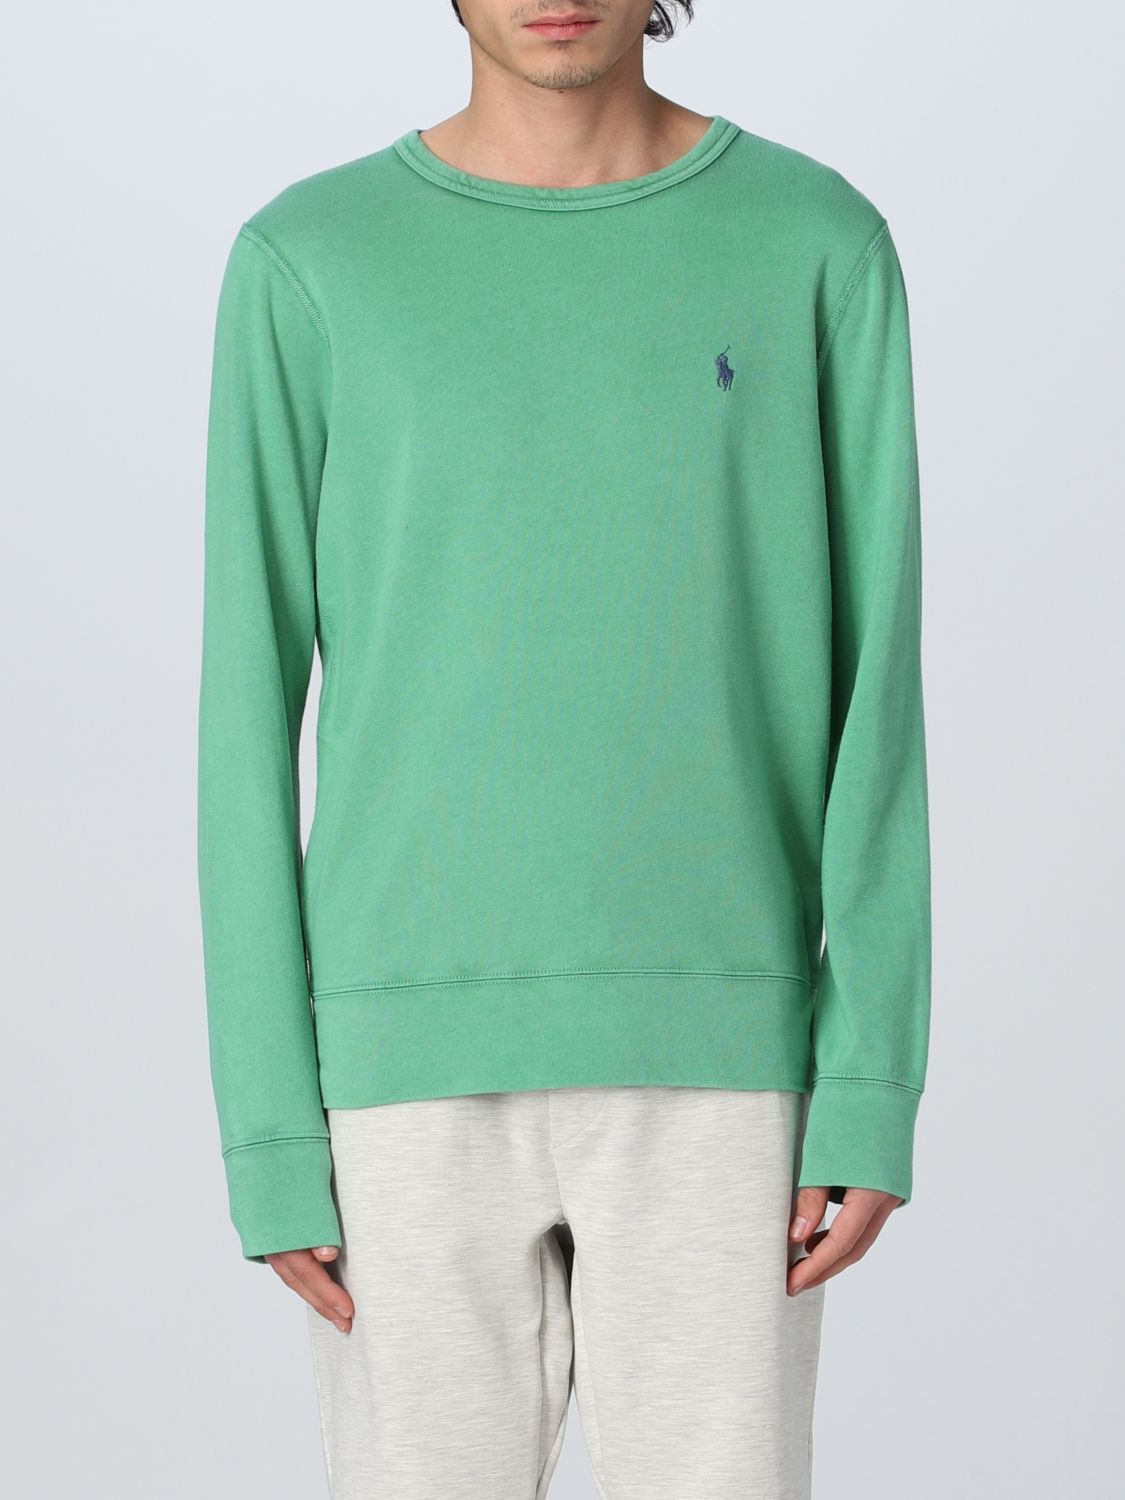 POLO RALPH LAUREN: sweater for man - Green | Polo Ralph Lauren sweater  710899996 online on 